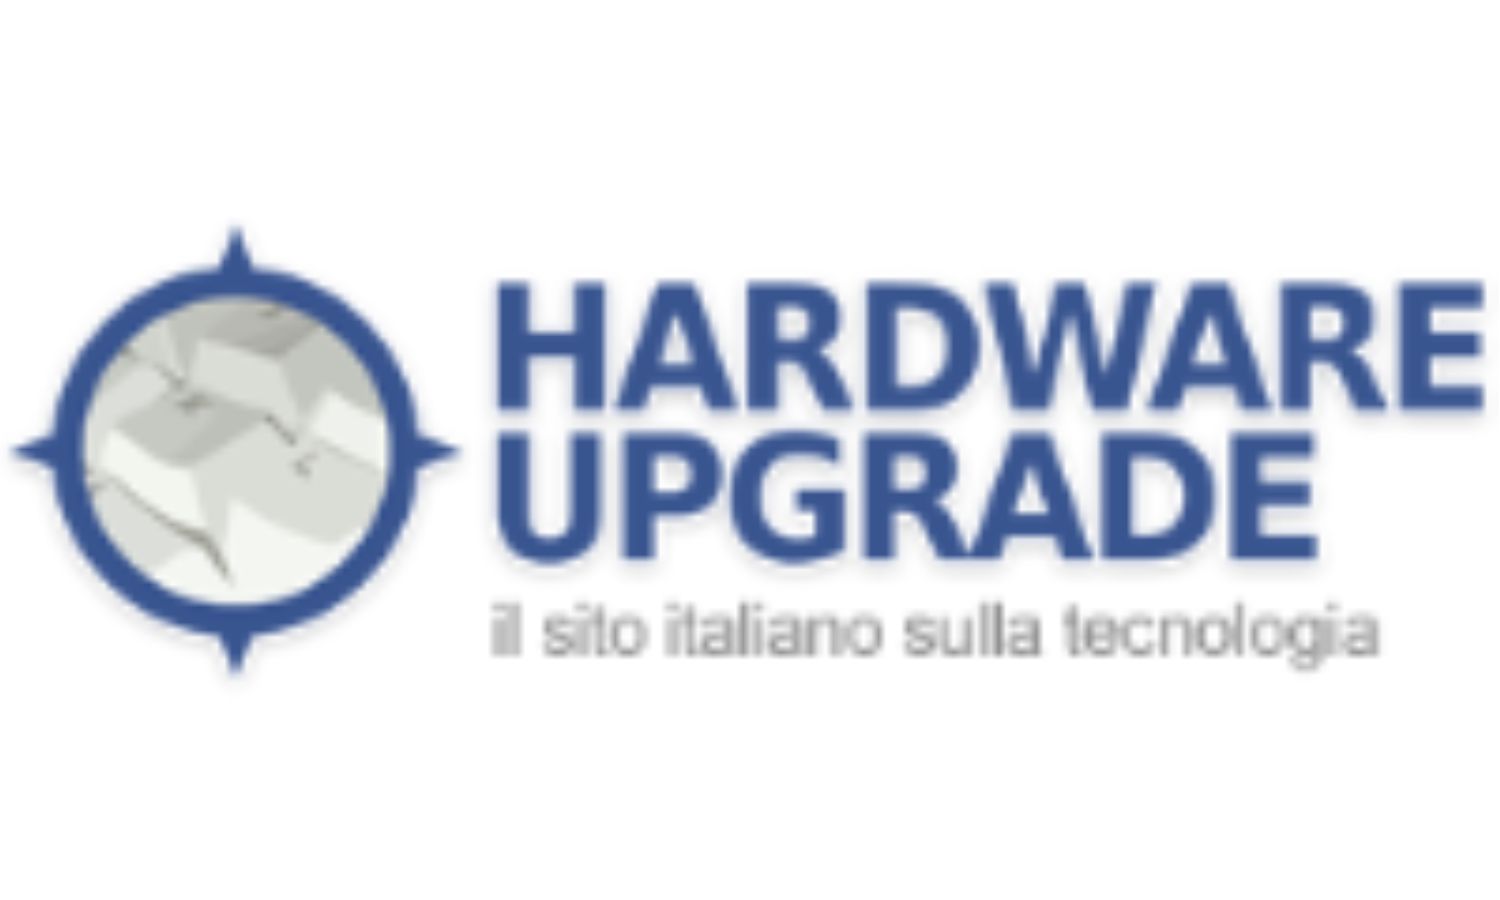  Hardware Upgrade S.r.l. logo